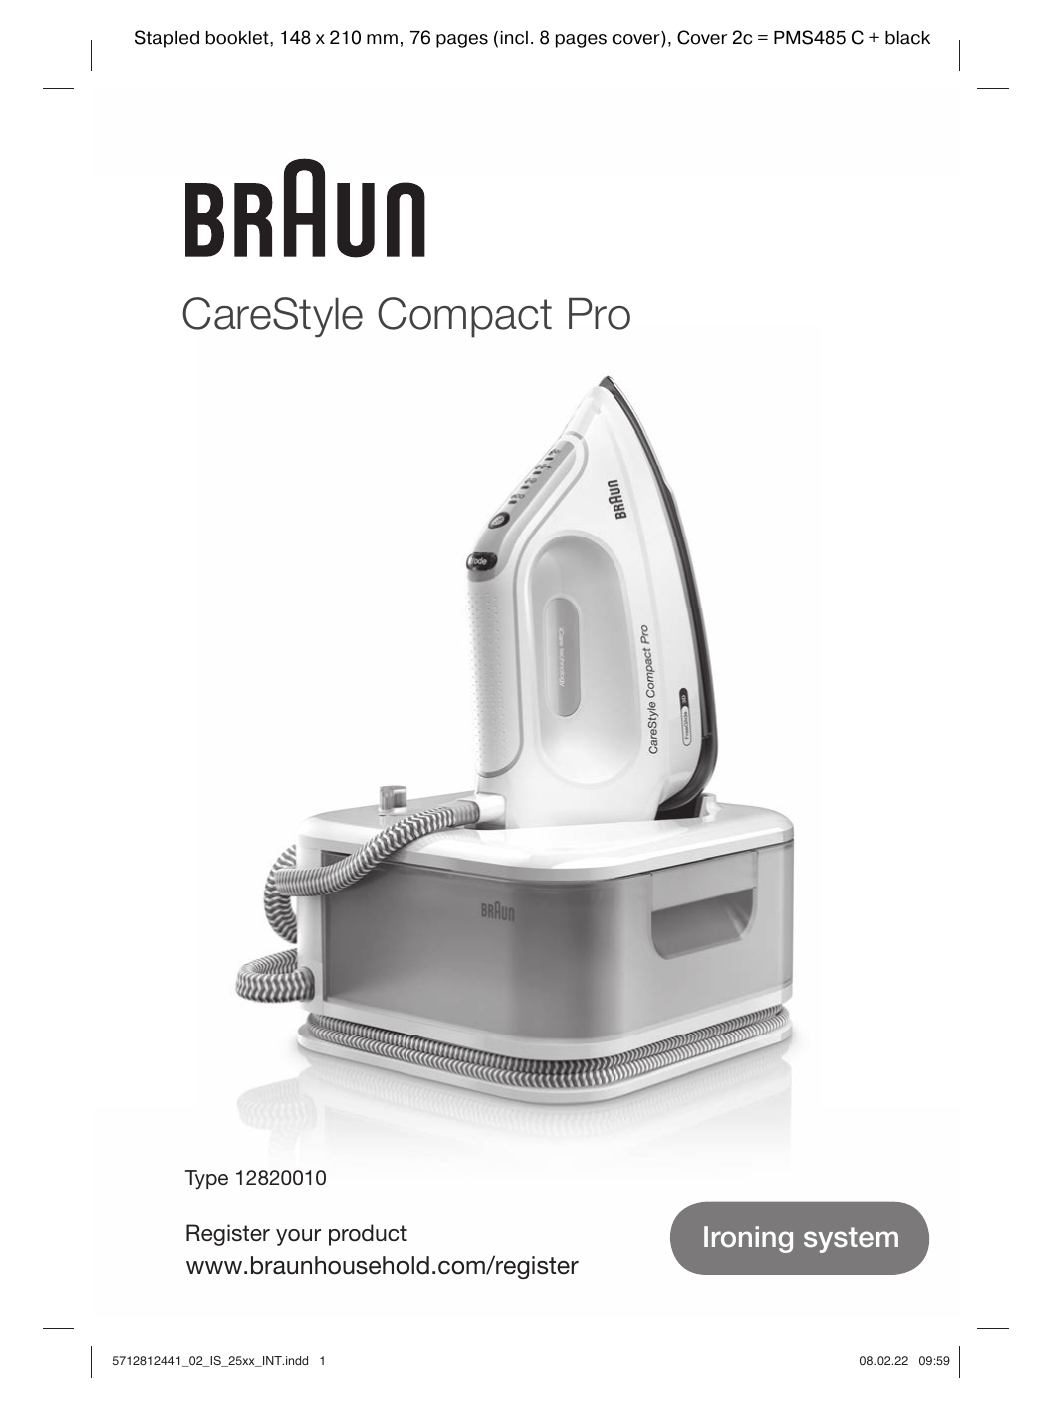 Braun IS 2577 Compact Pro Steam generator iron instruction manual